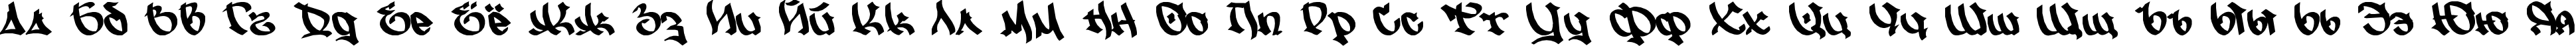 Пример написания русского алфавита шрифтом spike